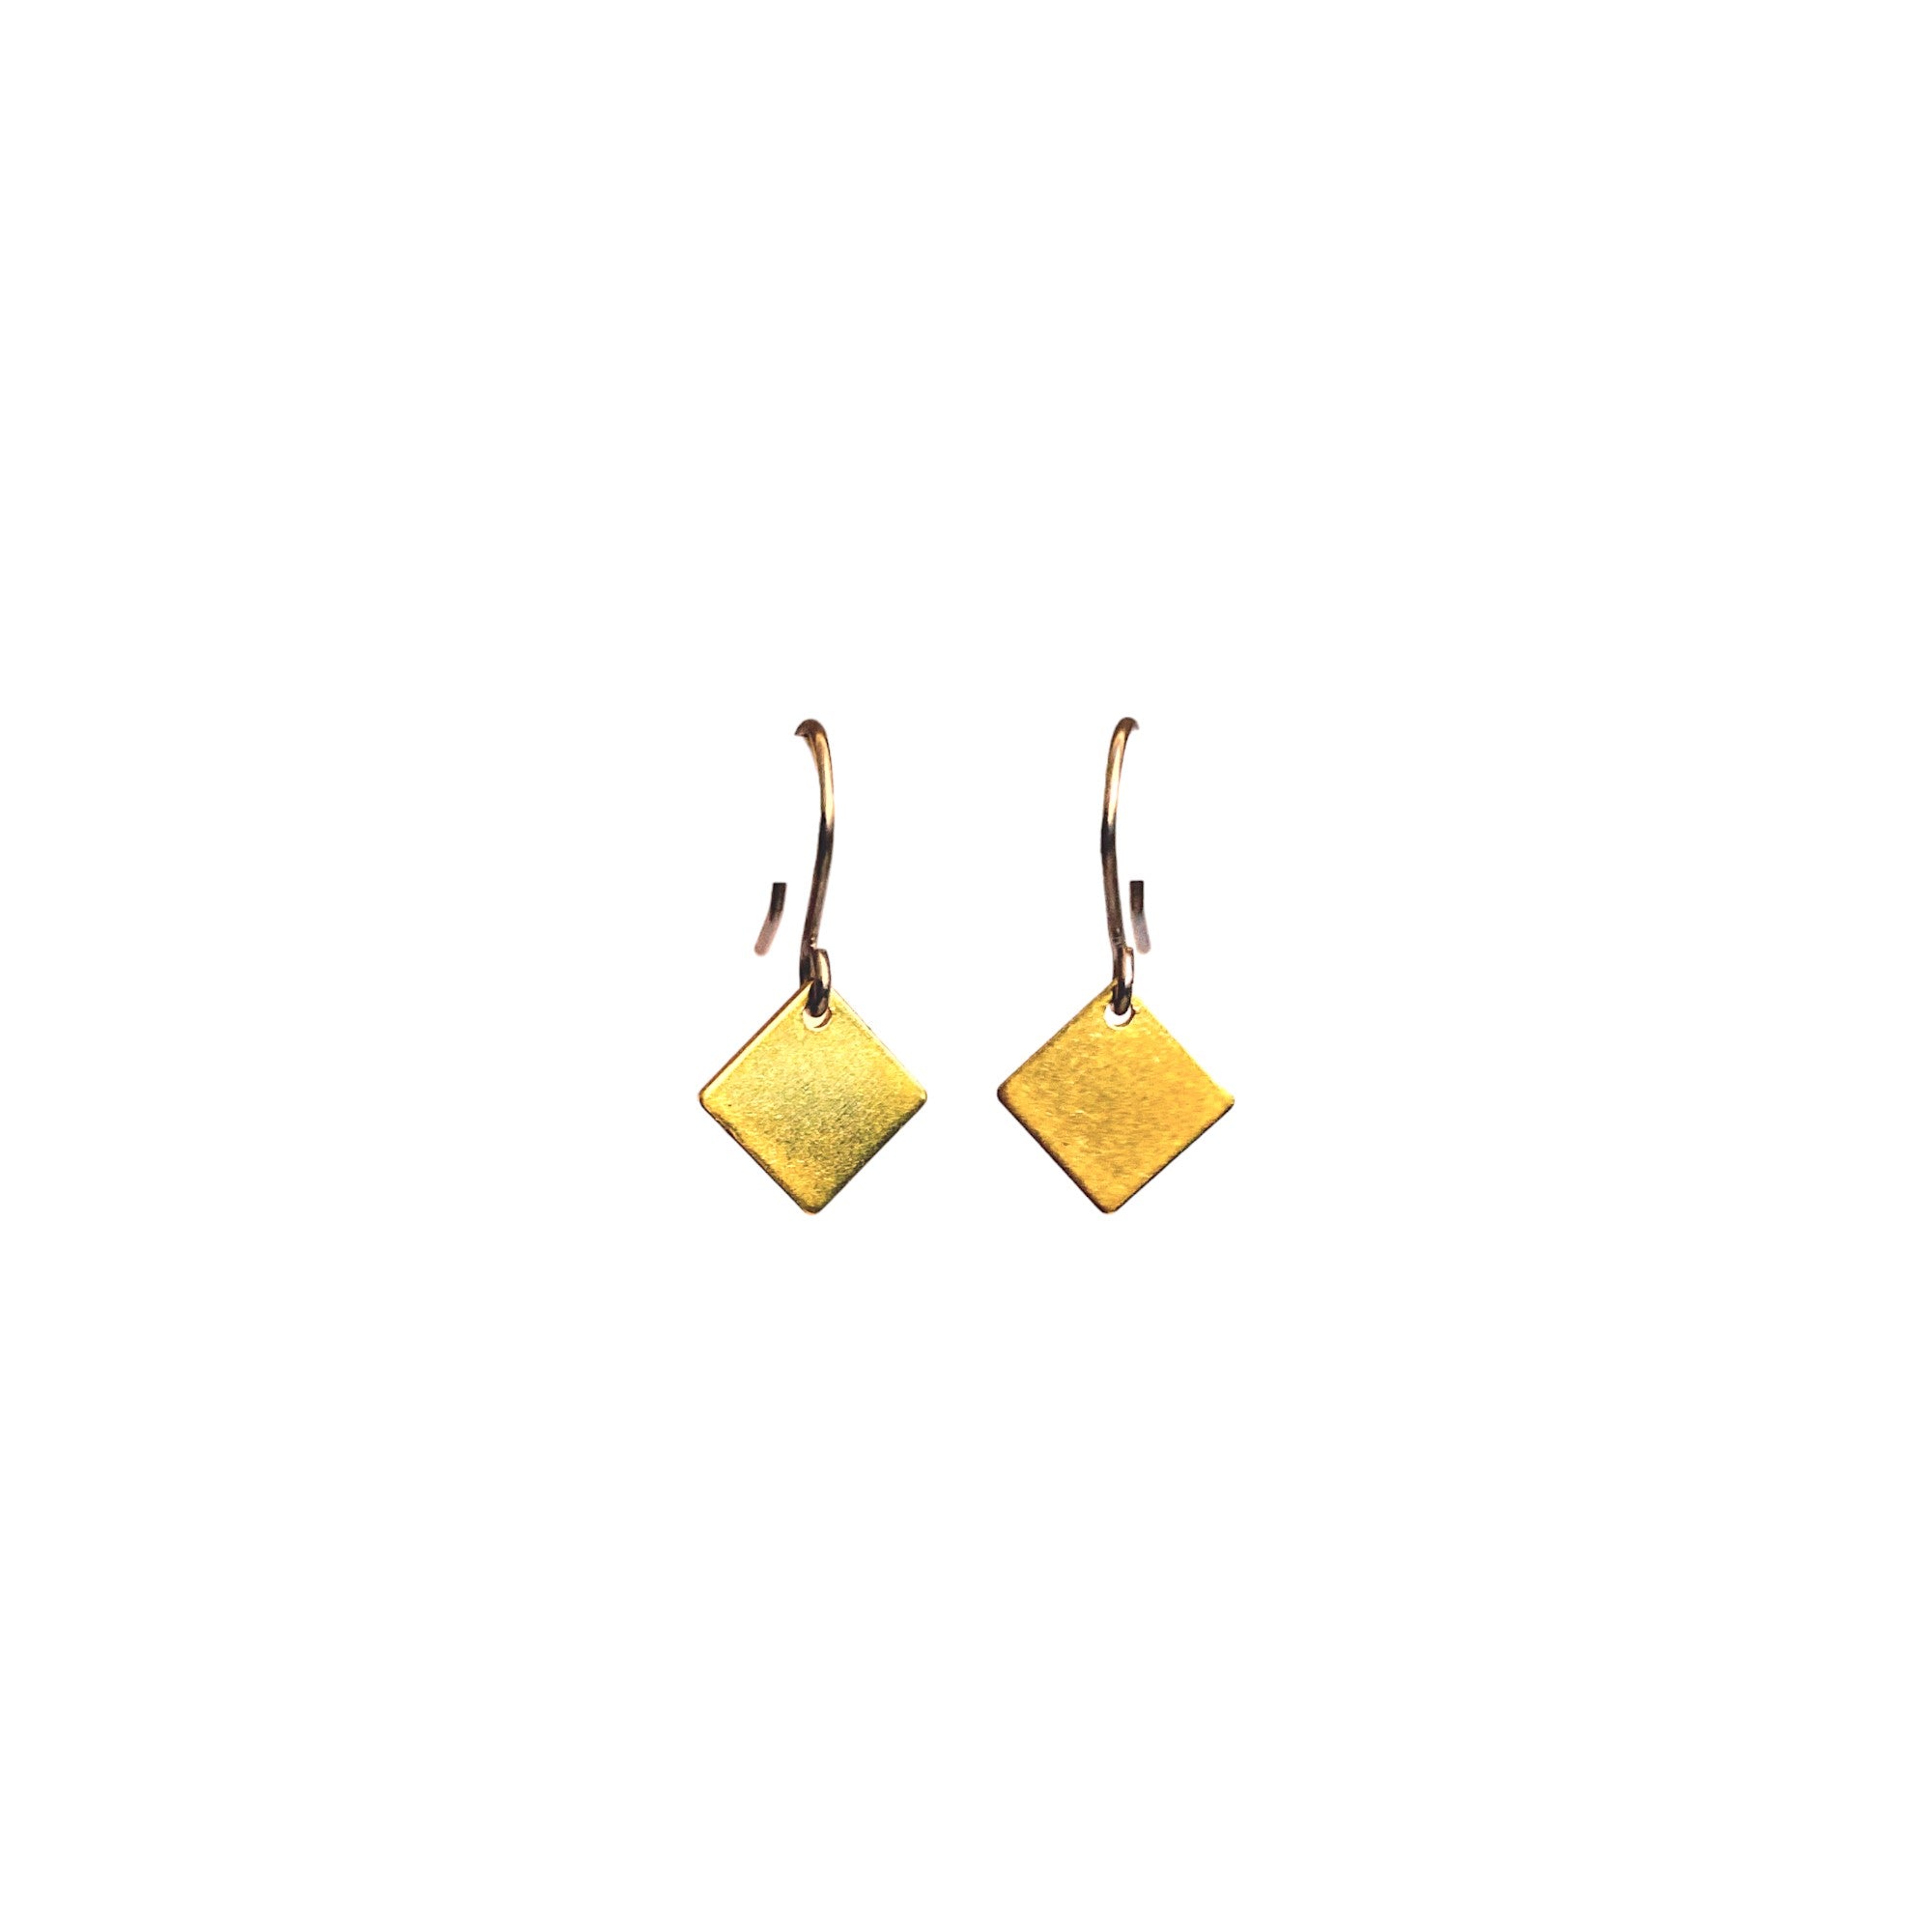 Square gold minimal earrings